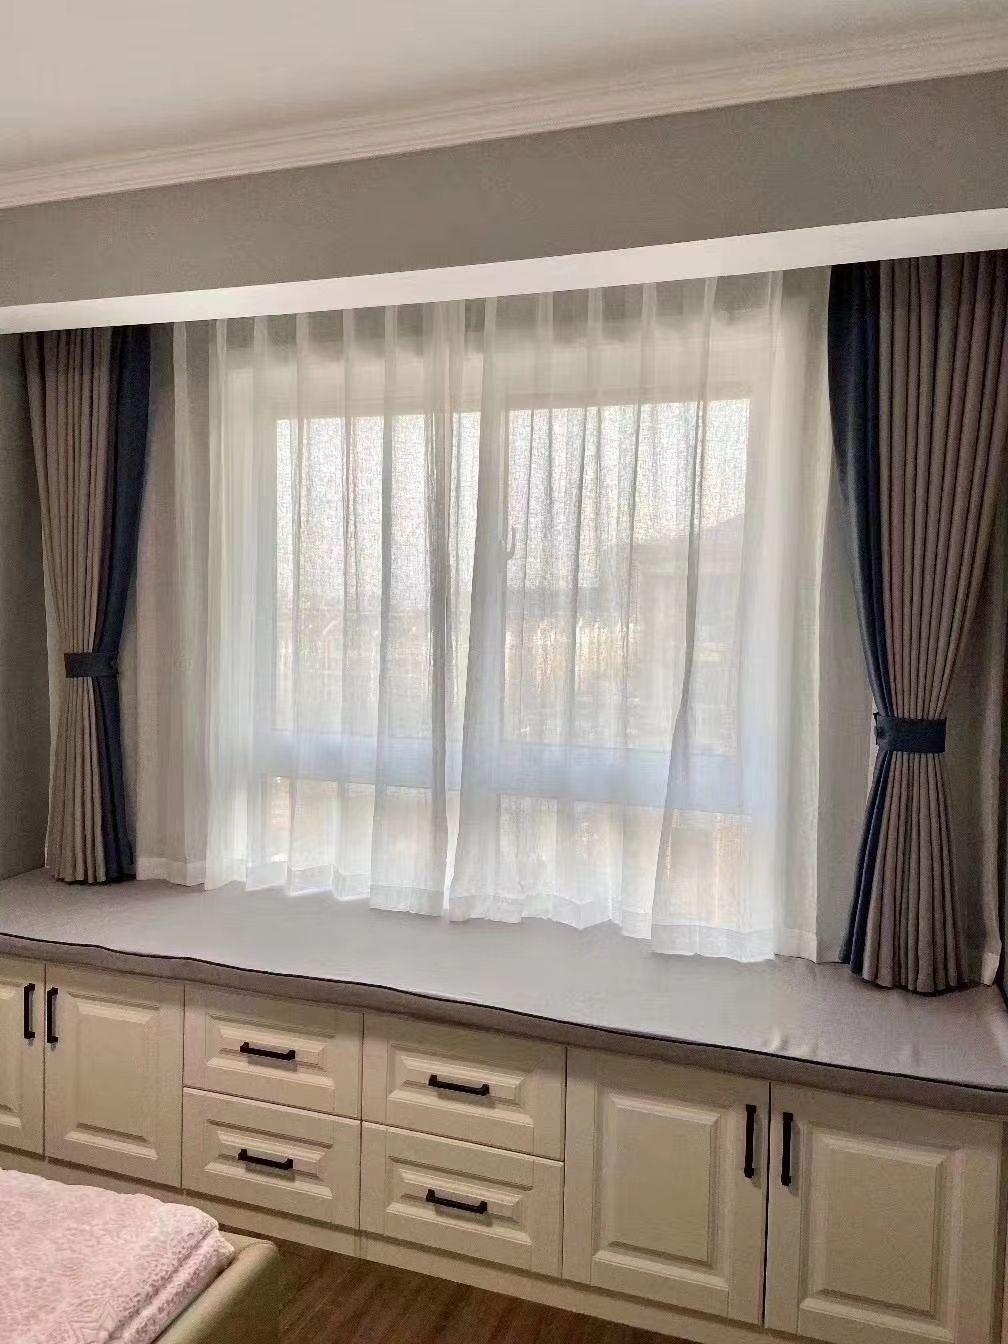 飘窗需要做窗帘盒吗